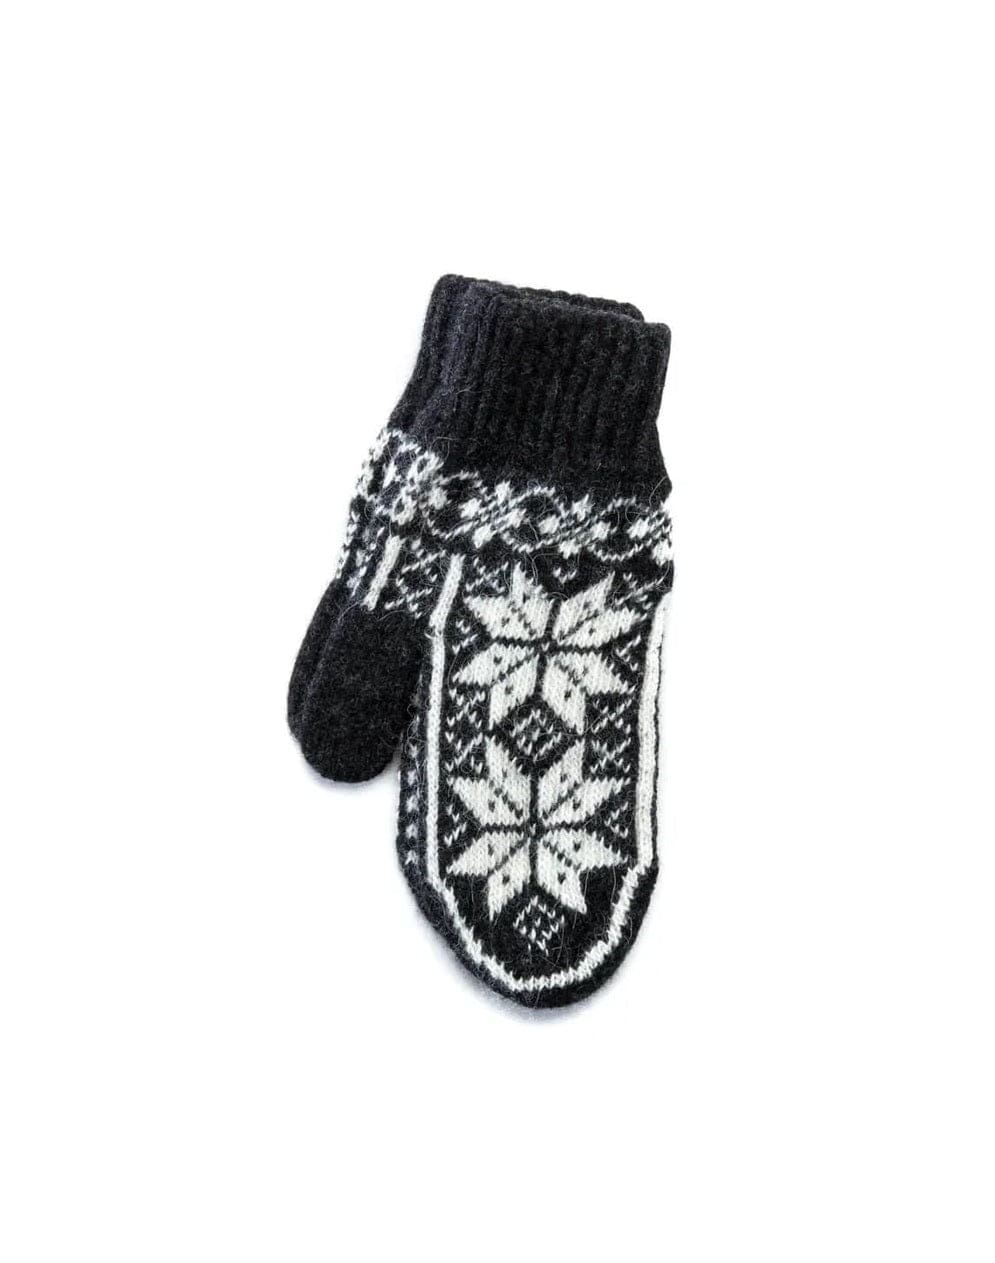 Black Varma Wool Headband - Eight Petalled Rose Flower pattern - The Icelandic Store